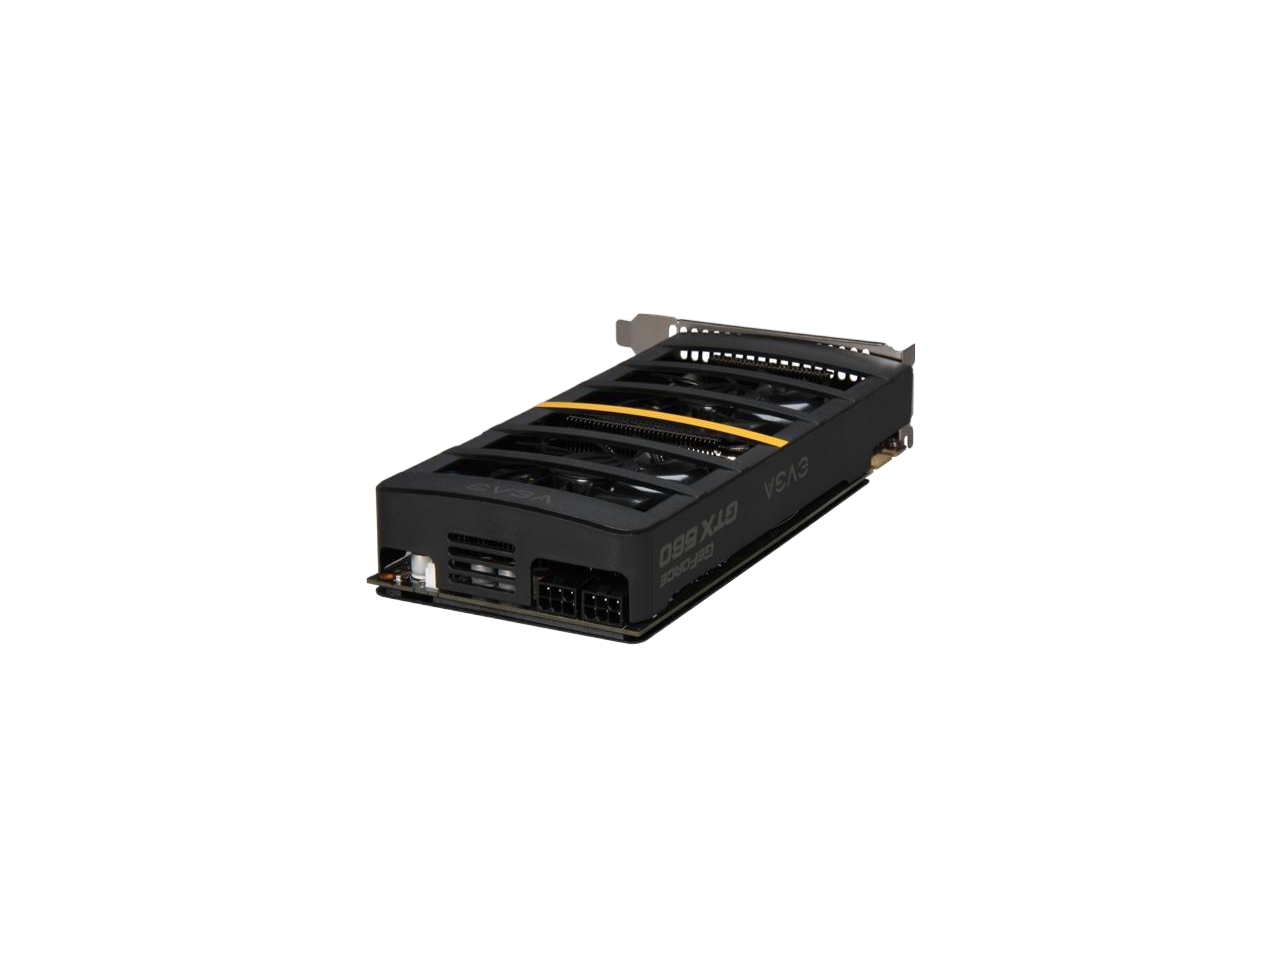 EVGA GeForce GTX 560 DS SSC 1GB 256-bit GDDR5 PCI Express 2.0 x16 HDCP Ready SLI Support Video Card 01G-P3-1466-KR